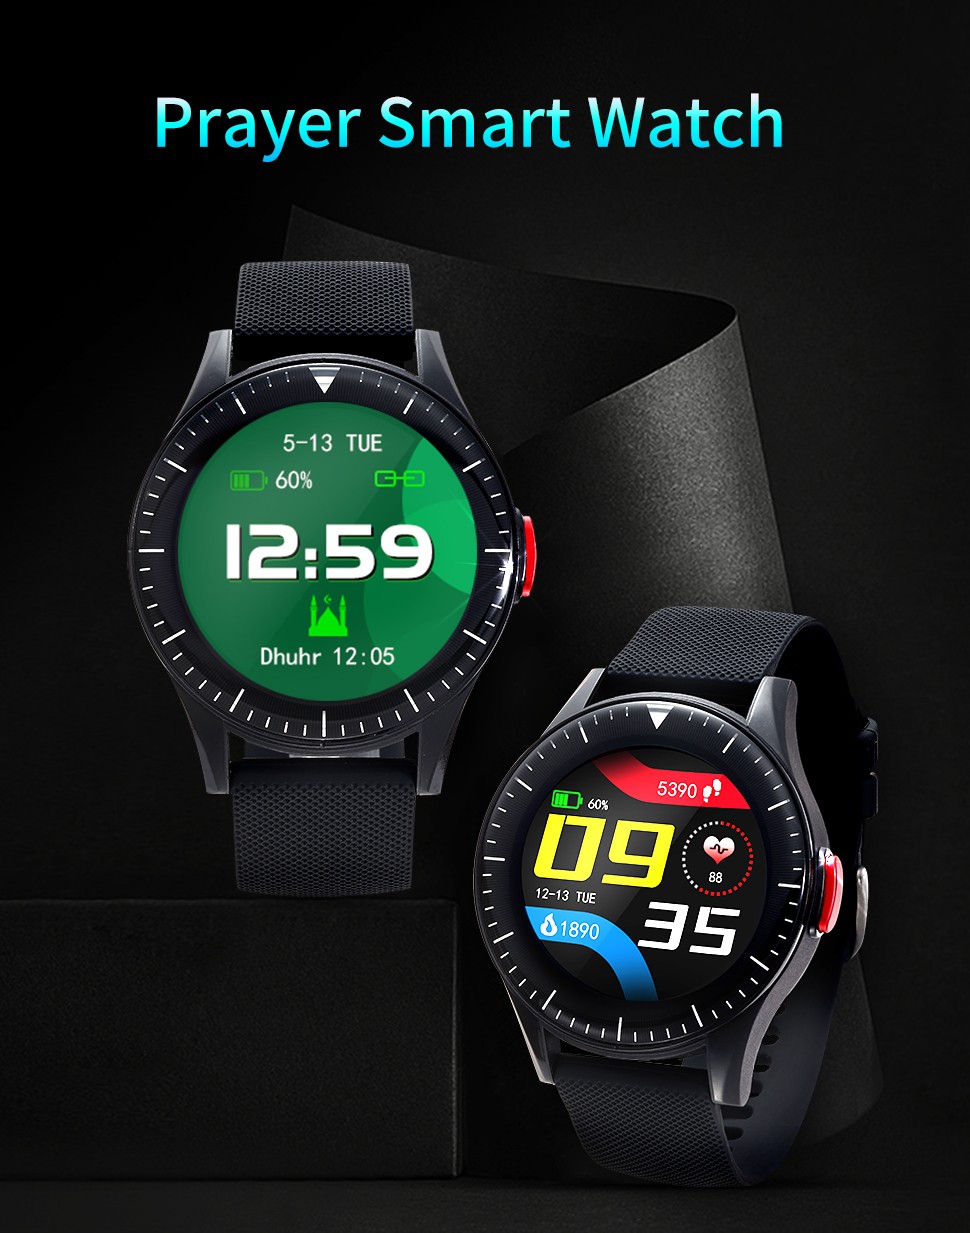 Prayer watch, Muslim, GPS watch, Compass watch, smart watch, SPO2 watch